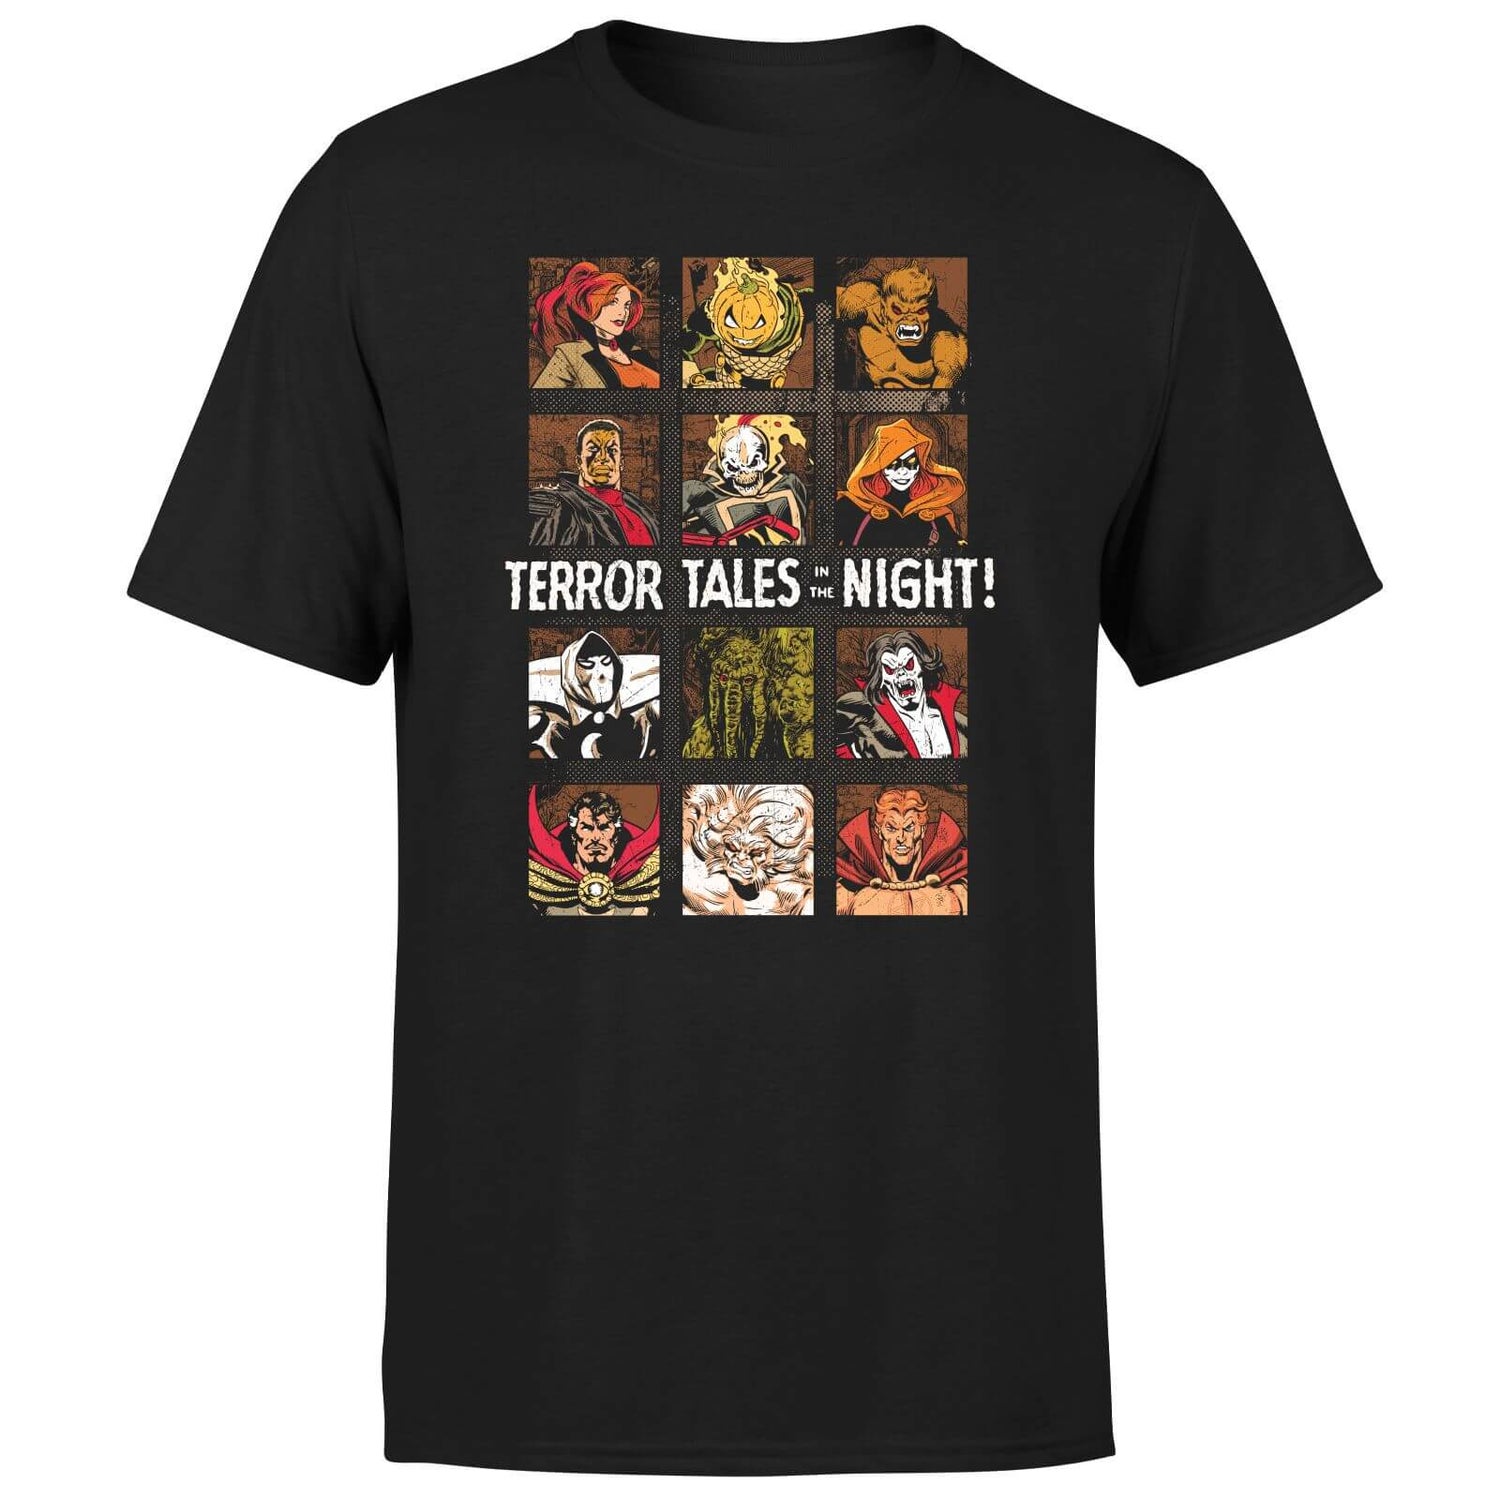 Terror Tales Men's T-Shirt - Black